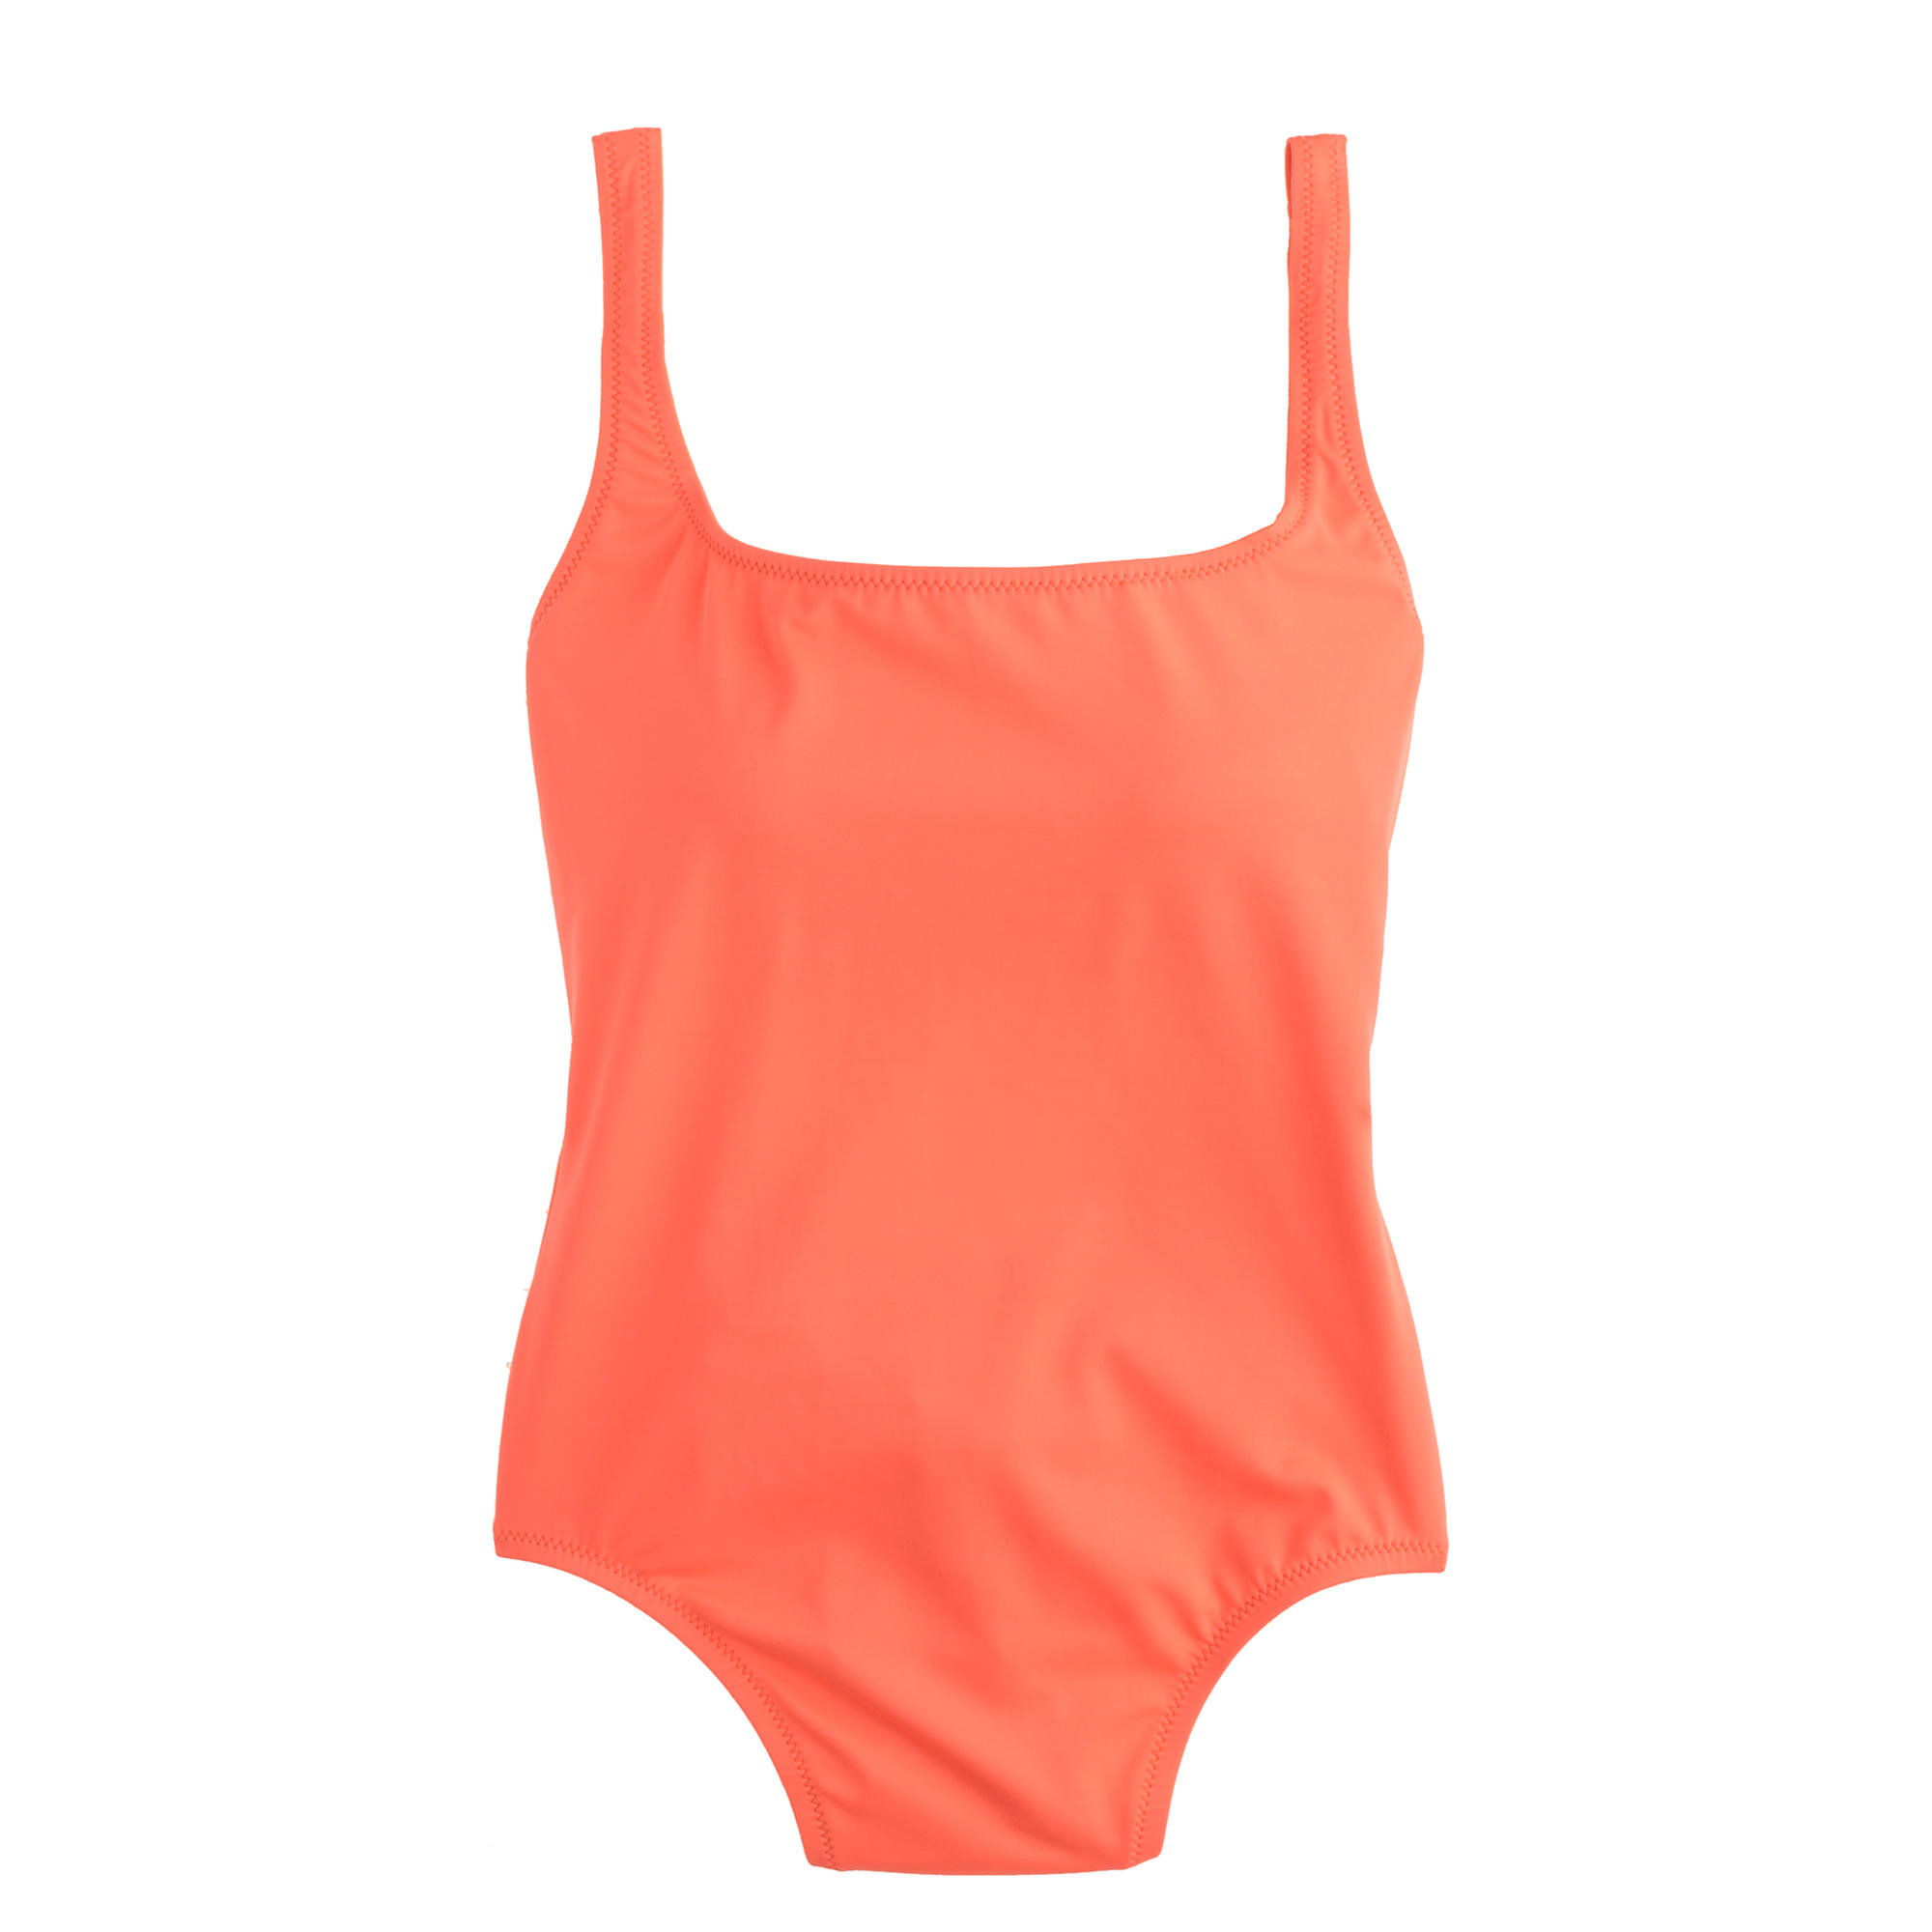 Lyst - J.Crew Long Torso Neon Scoopback One-piece Swimsuit in Orange